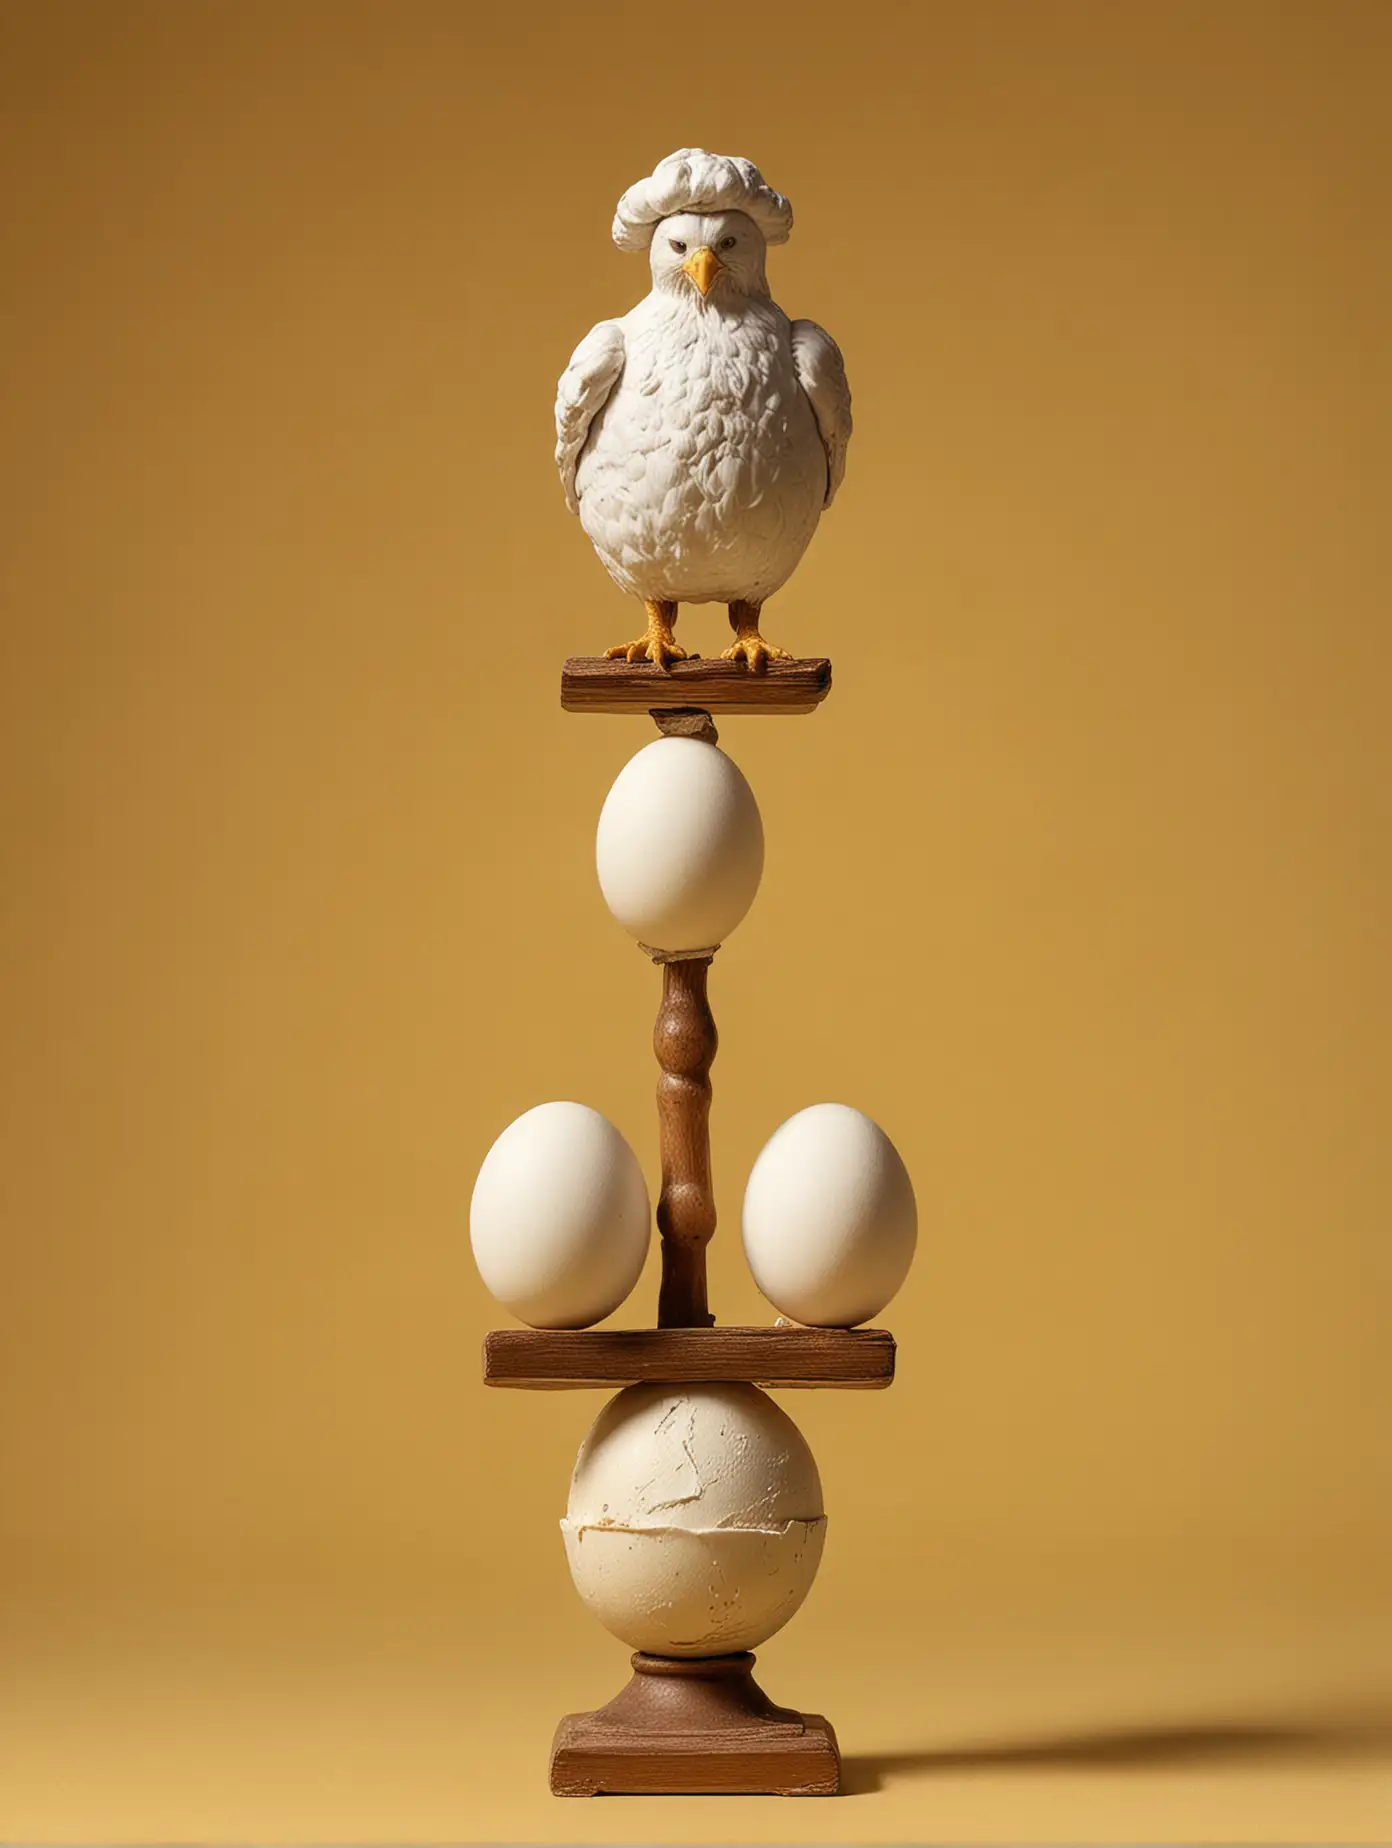 Raffaello Sanzio,Egg balancing,no people,yallow background